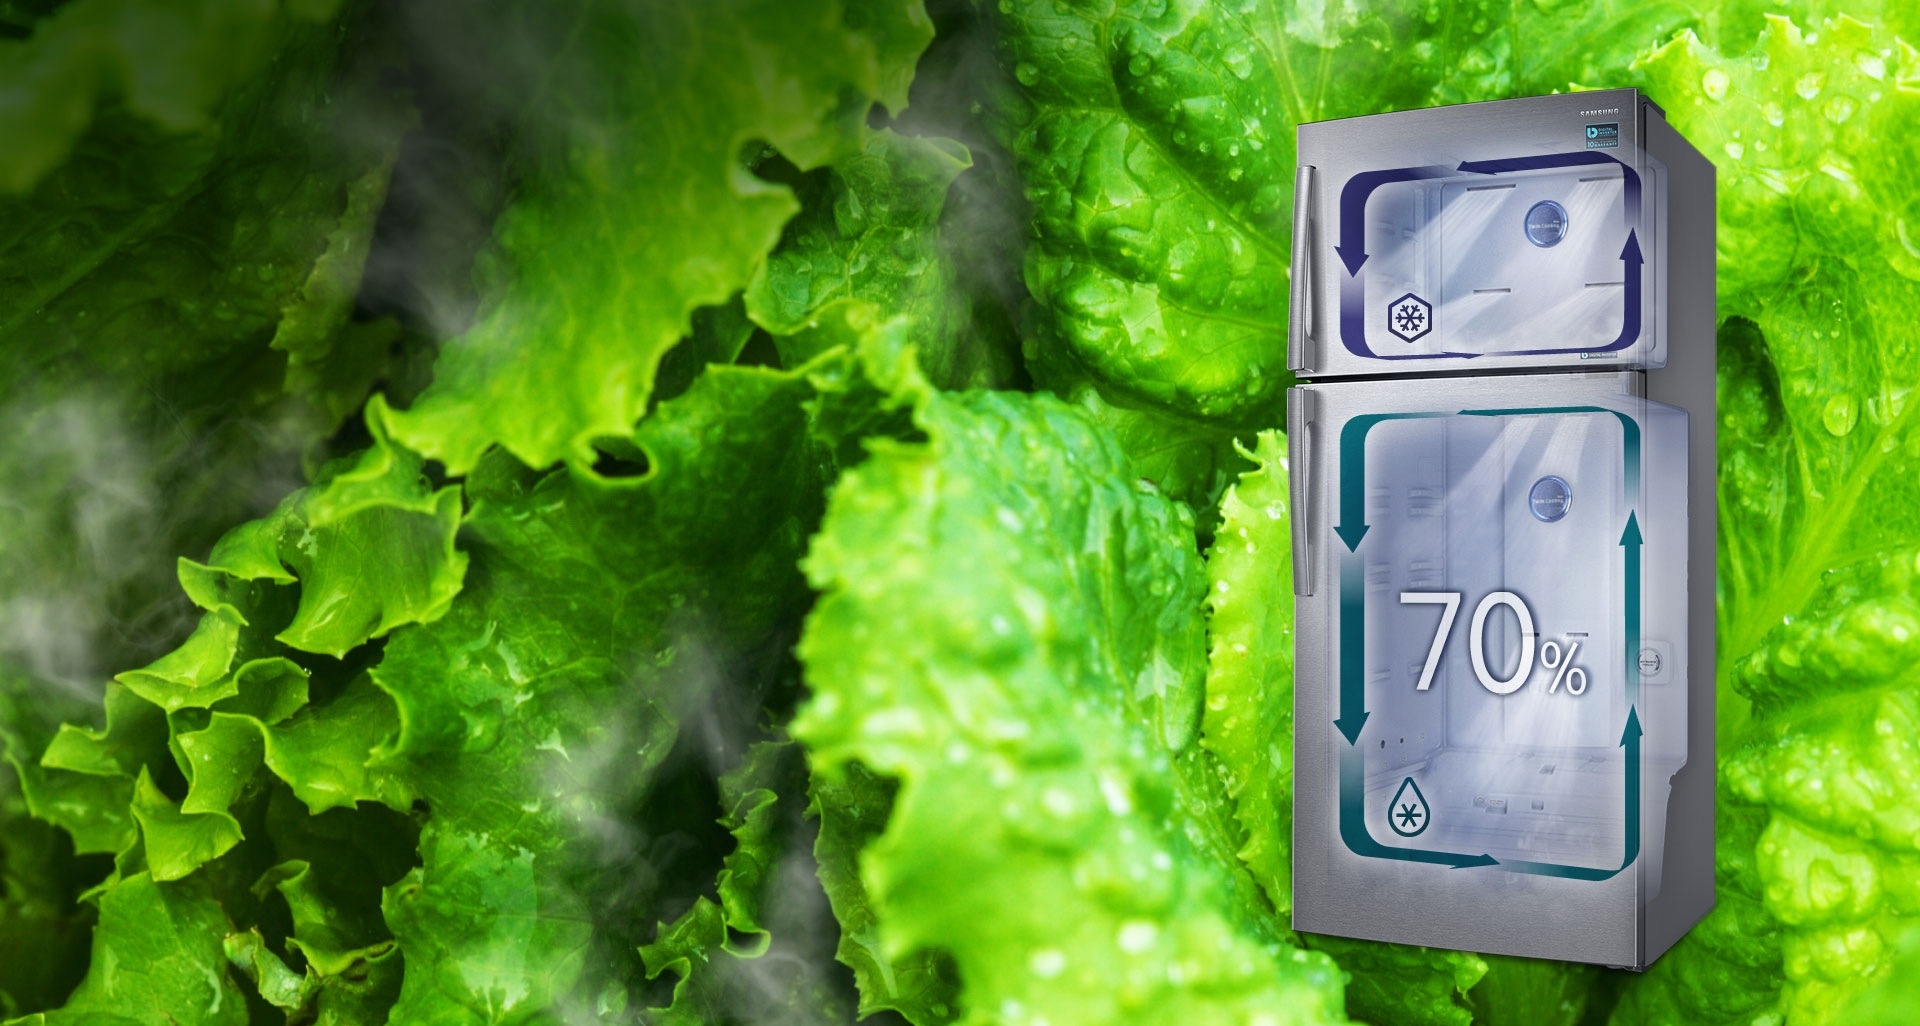 Samsung Top Freezer Refrigerator - Freshness and humidity